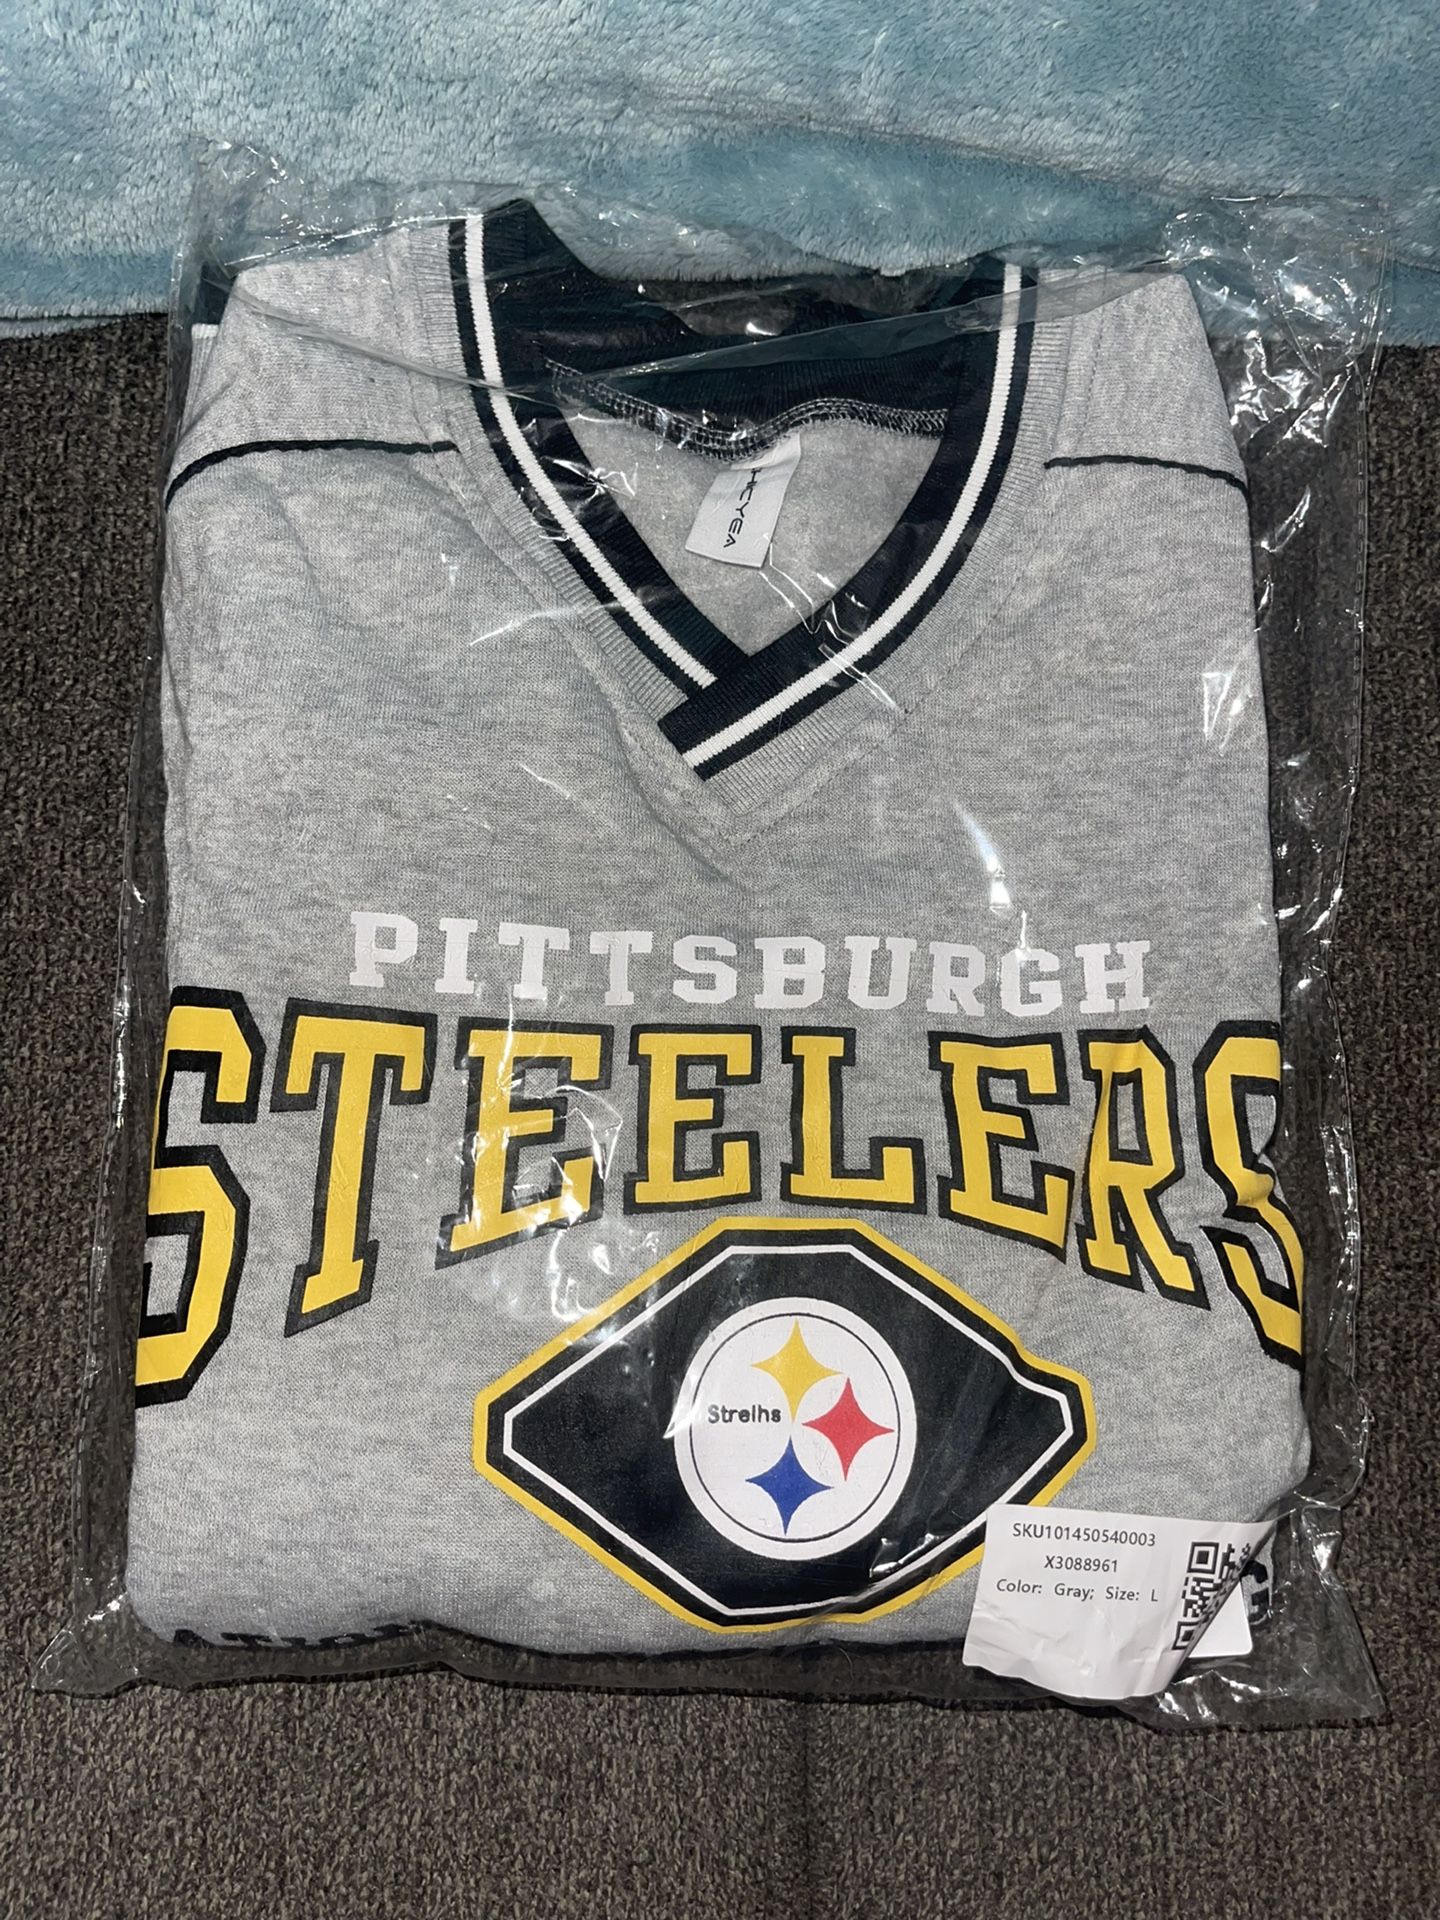 Brand New Steelers Sweater 